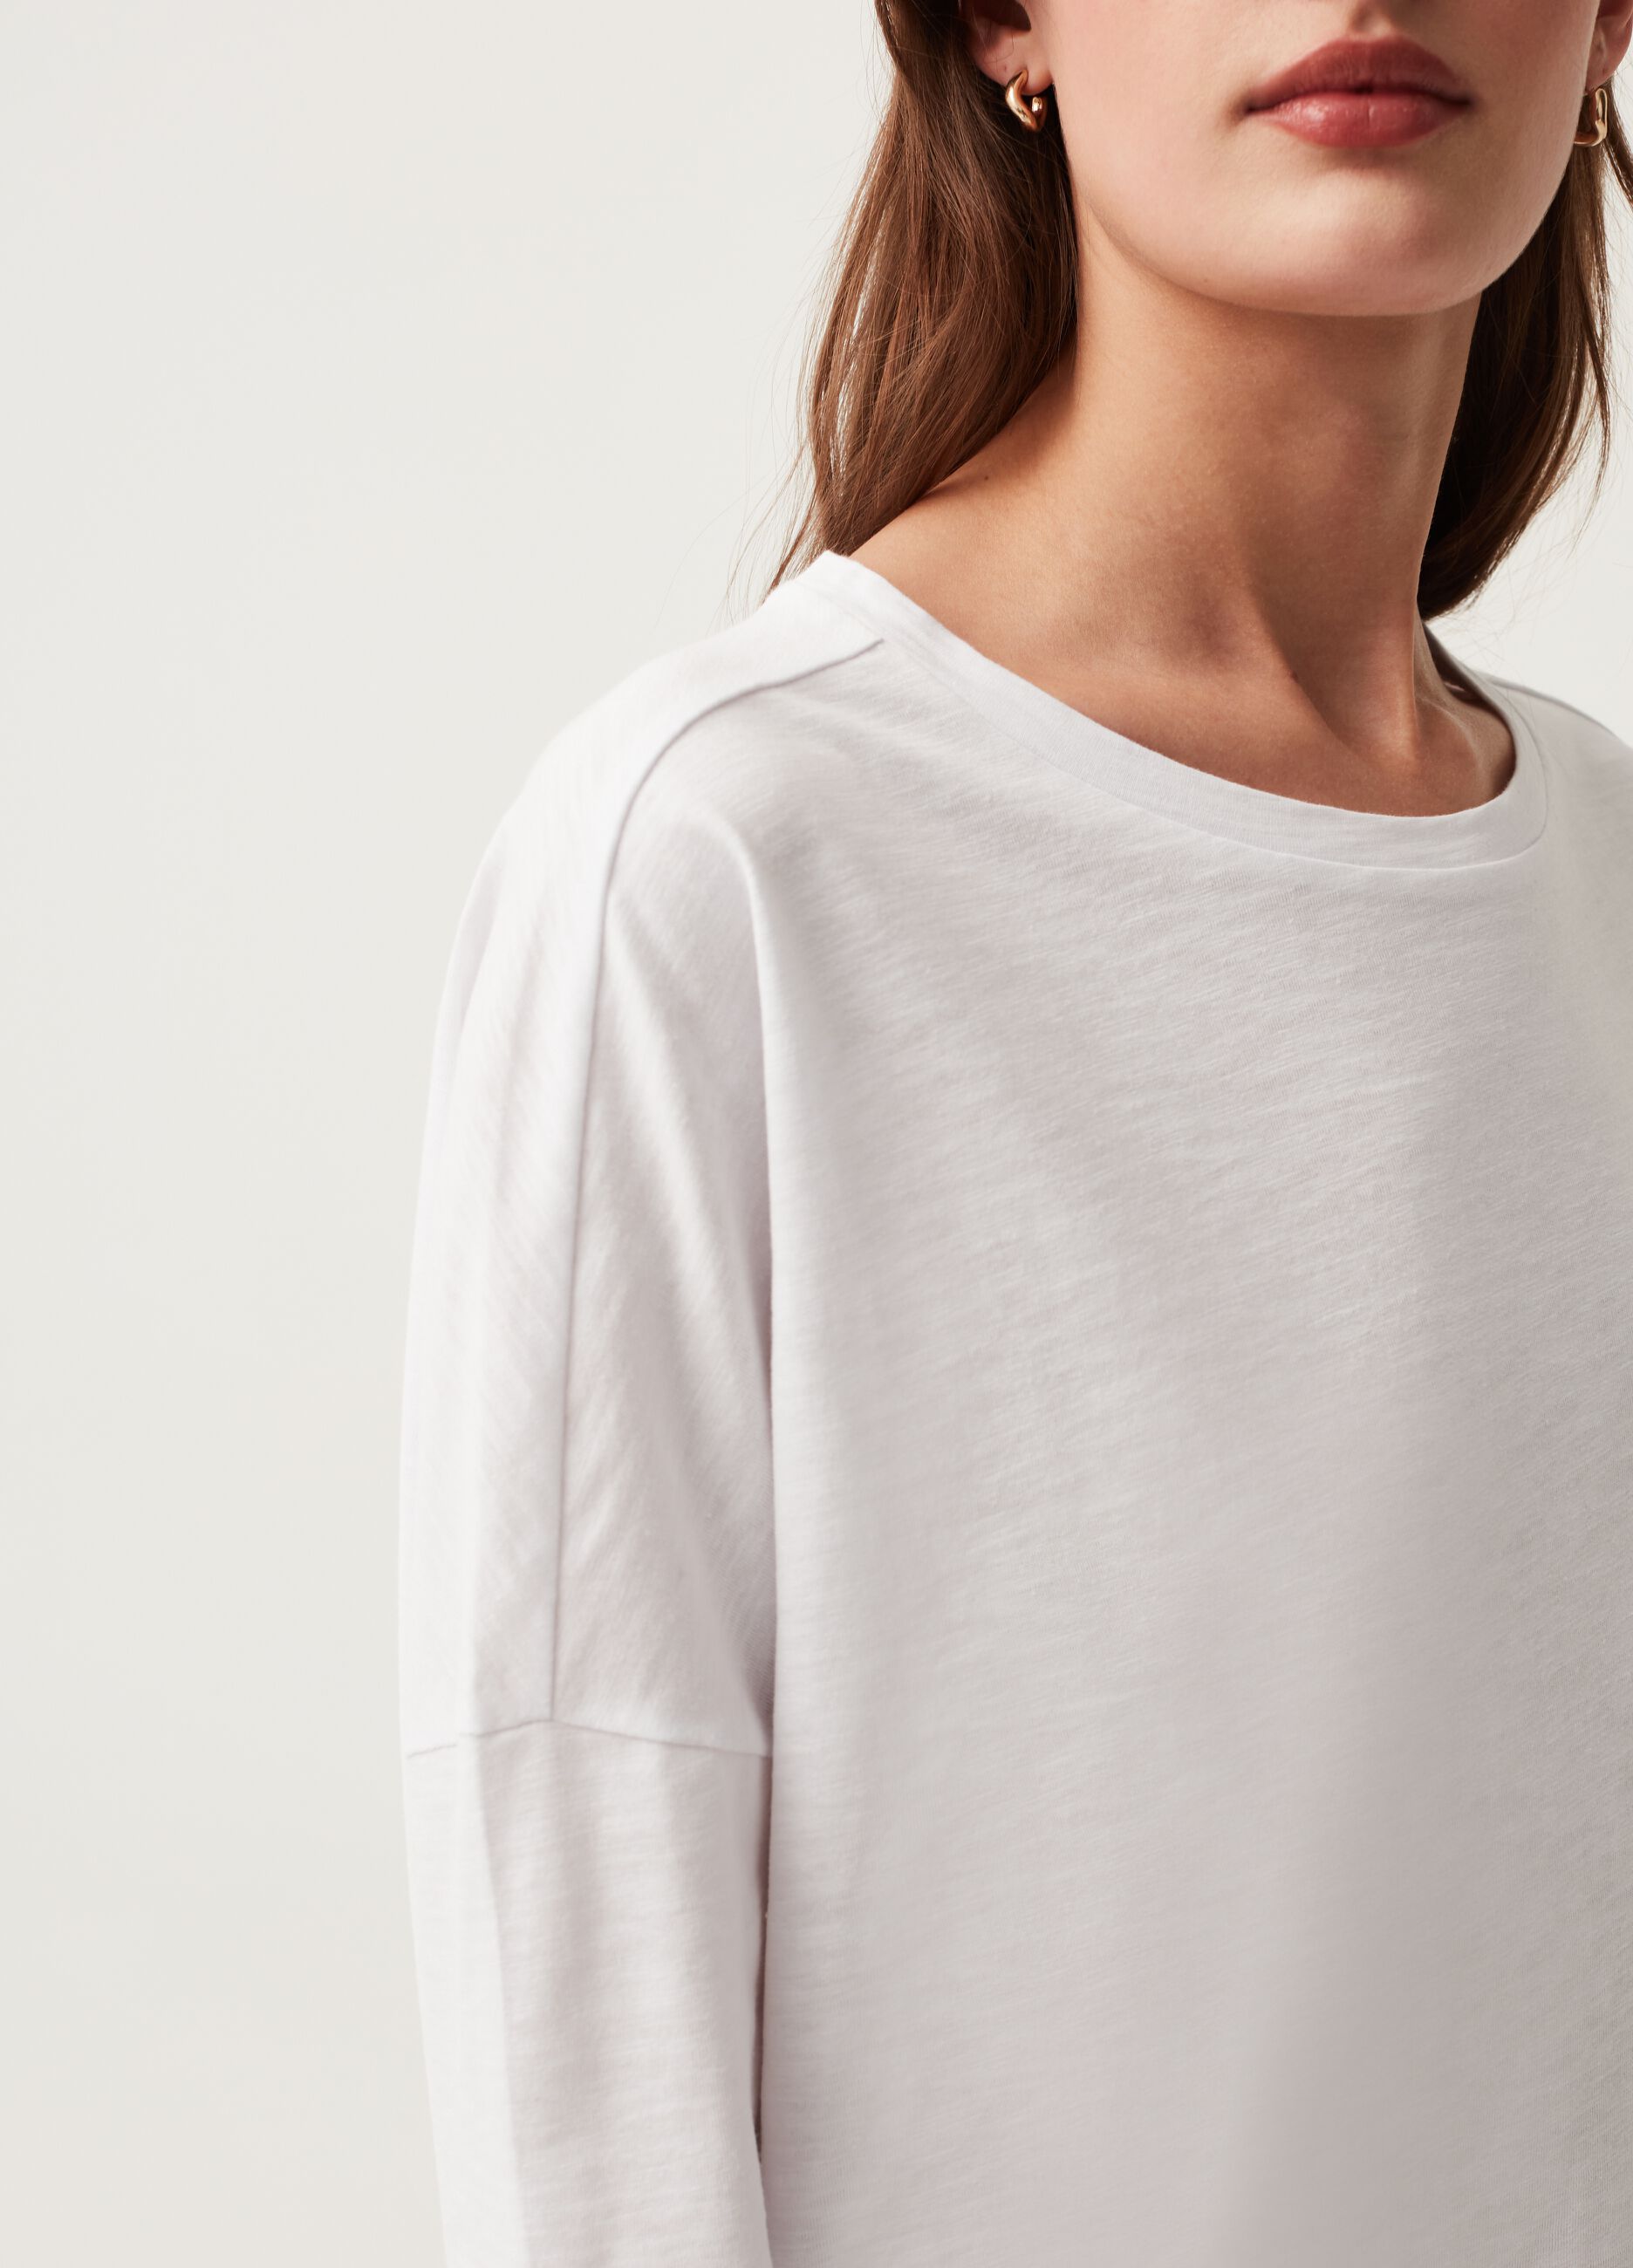 Long-sleeved T-shirt in cotton slub.